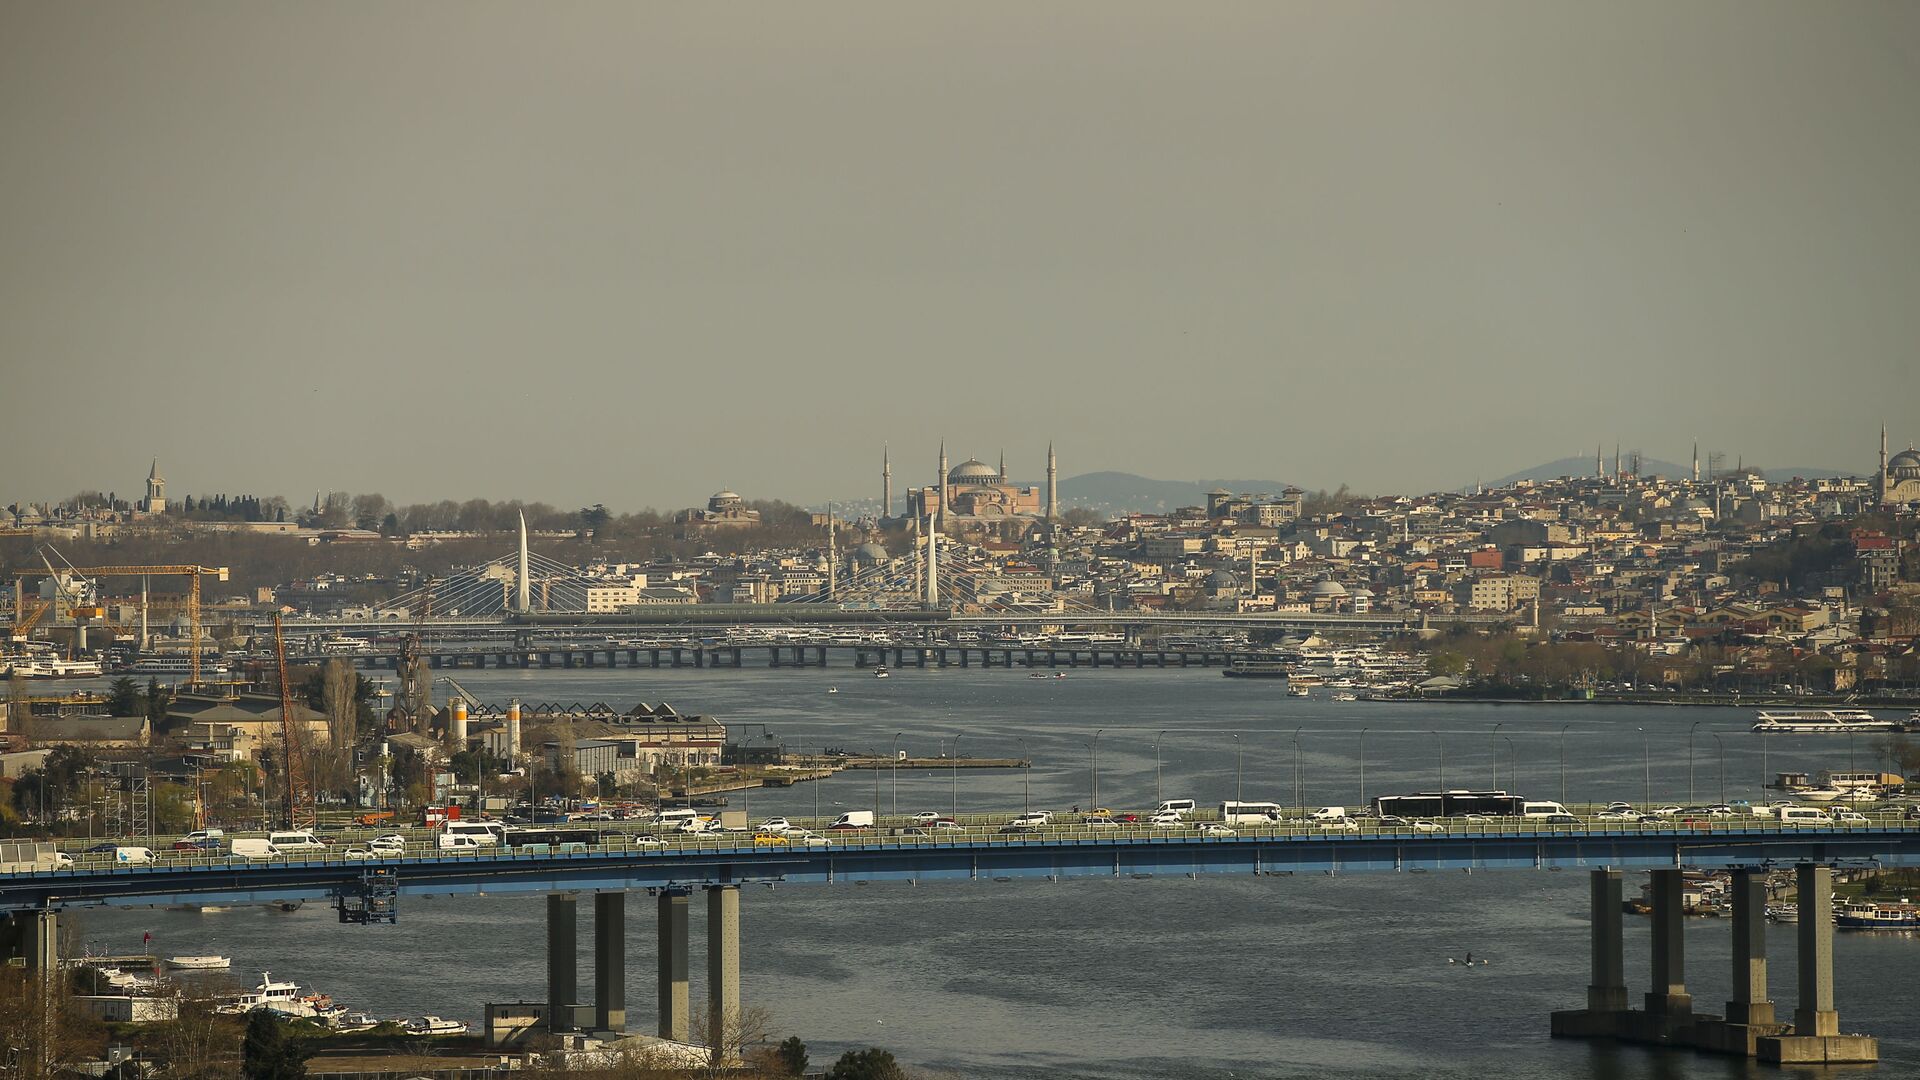 Вид на город Стамбул, фото из архива - Sputnik Азербайджан, 1920, 26.06.2021